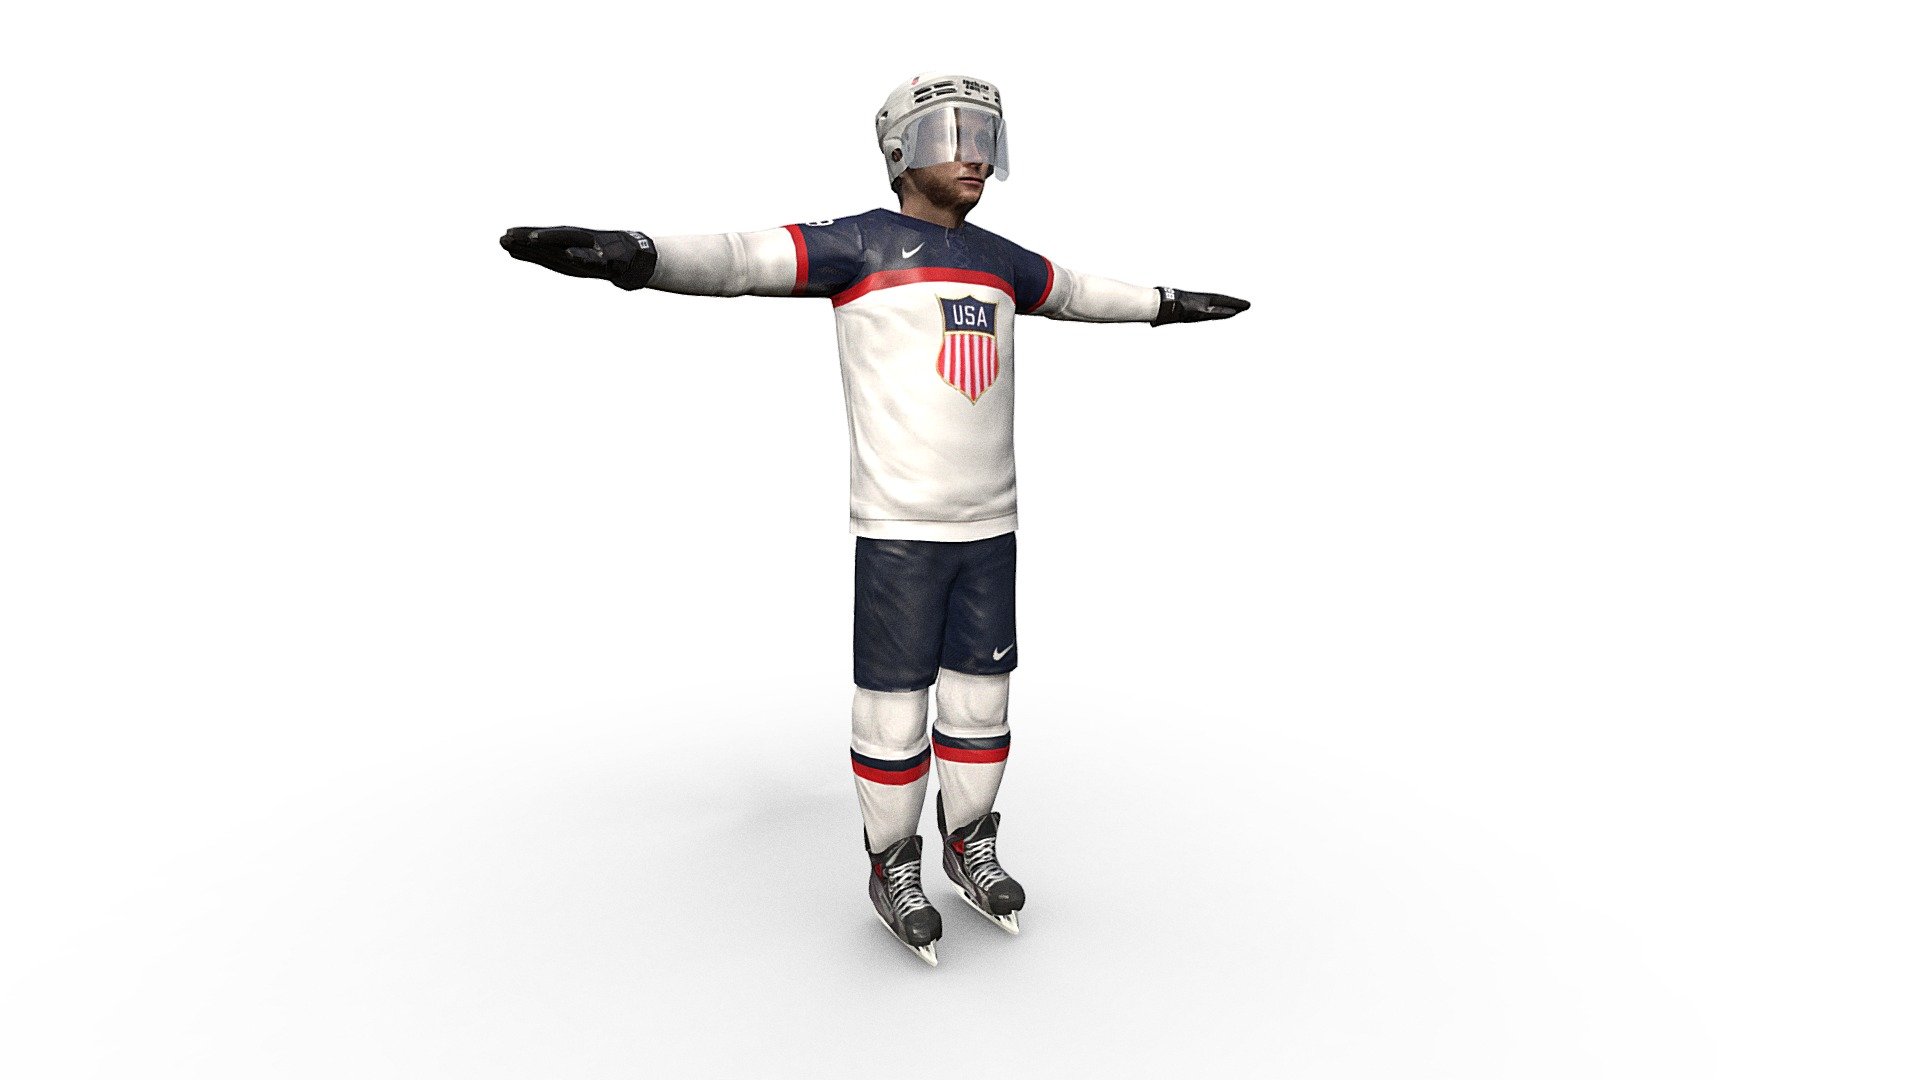 Patrick Kane Hockey Player lowpoly 3D Model - Patrick Kane Hockey Player - Buy Royalty Free 3D model by Omni Studio 3D (@omny3d) 3d model